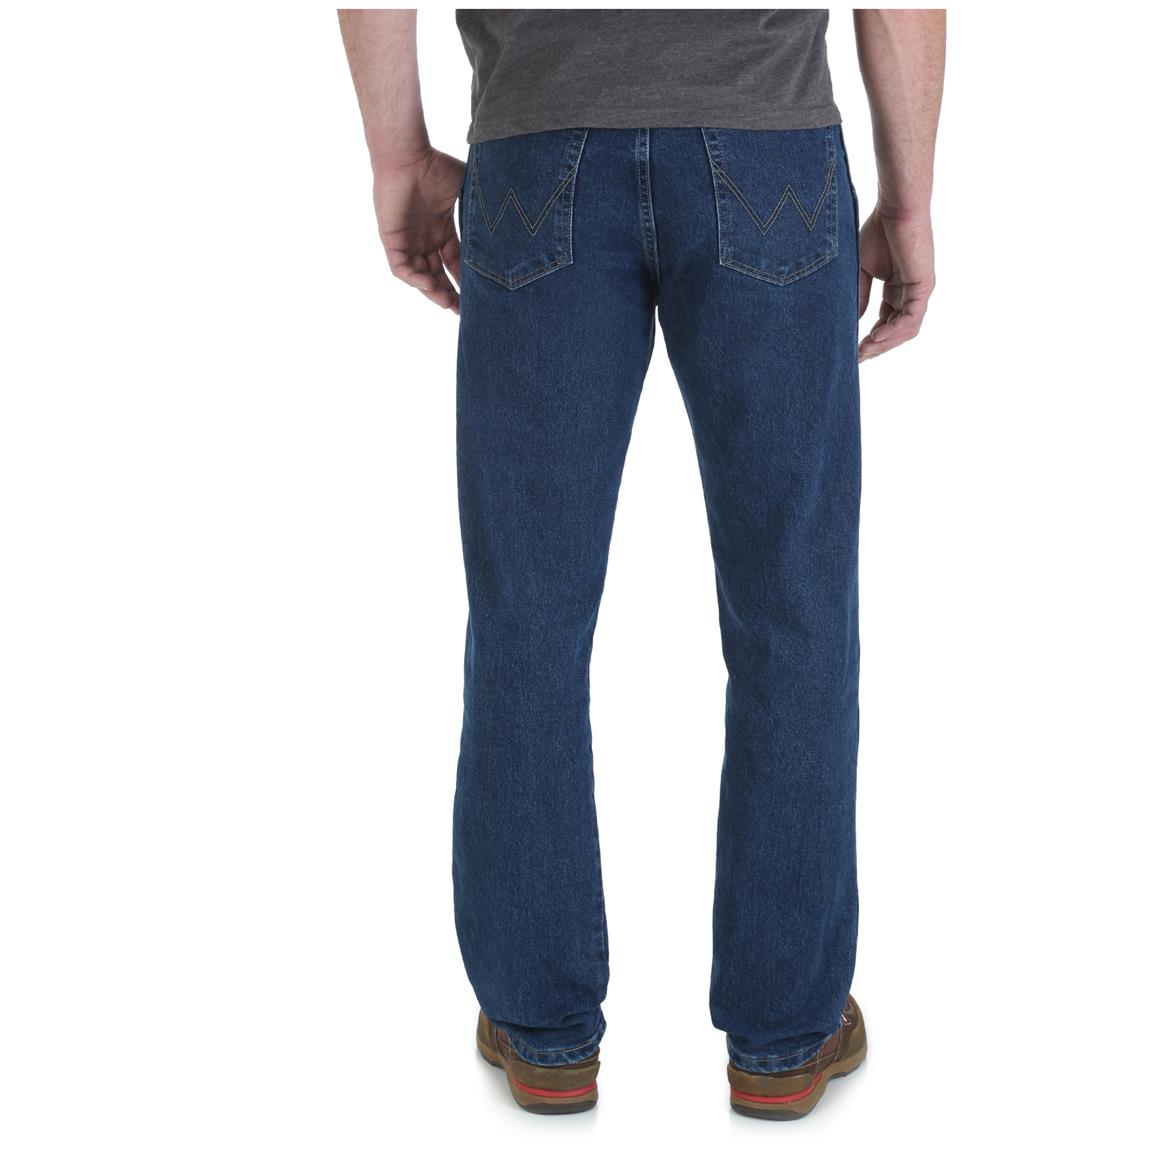 Wrangler Rugged Wear Men's Regular Fit Jean - 670514, Jeans & Pants at ...